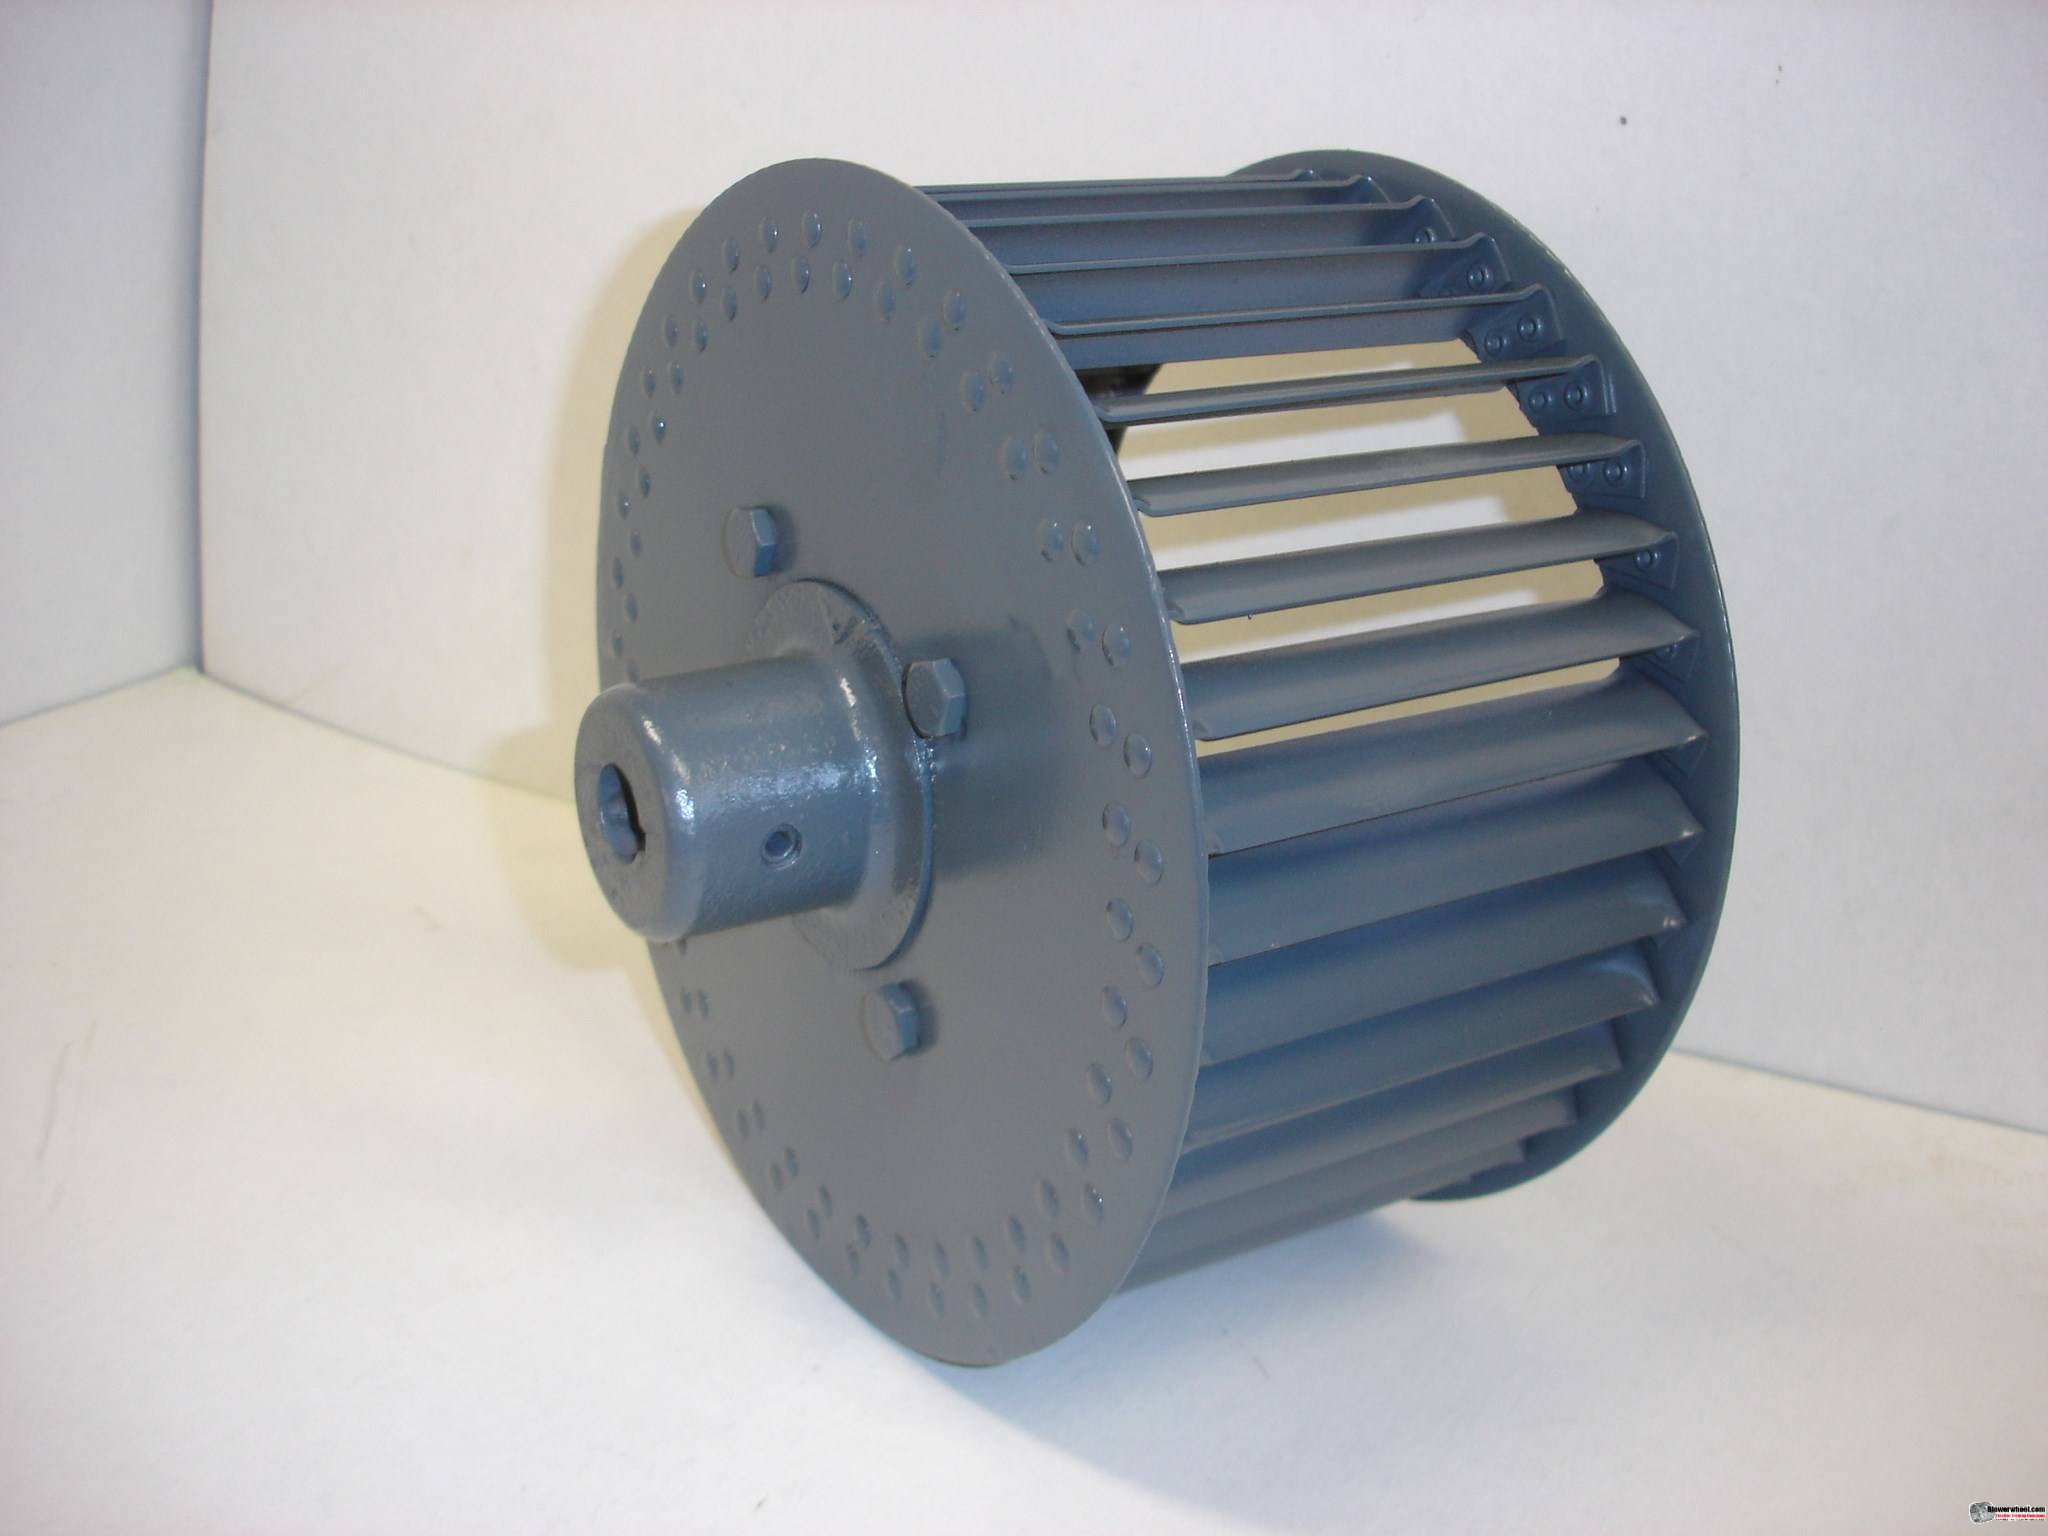 Single Inlet Steel Blower Wheel 10-13/16" Diameter 5-1/8" Width 11/16" Bore Clockwise rotation with an Outside Hub